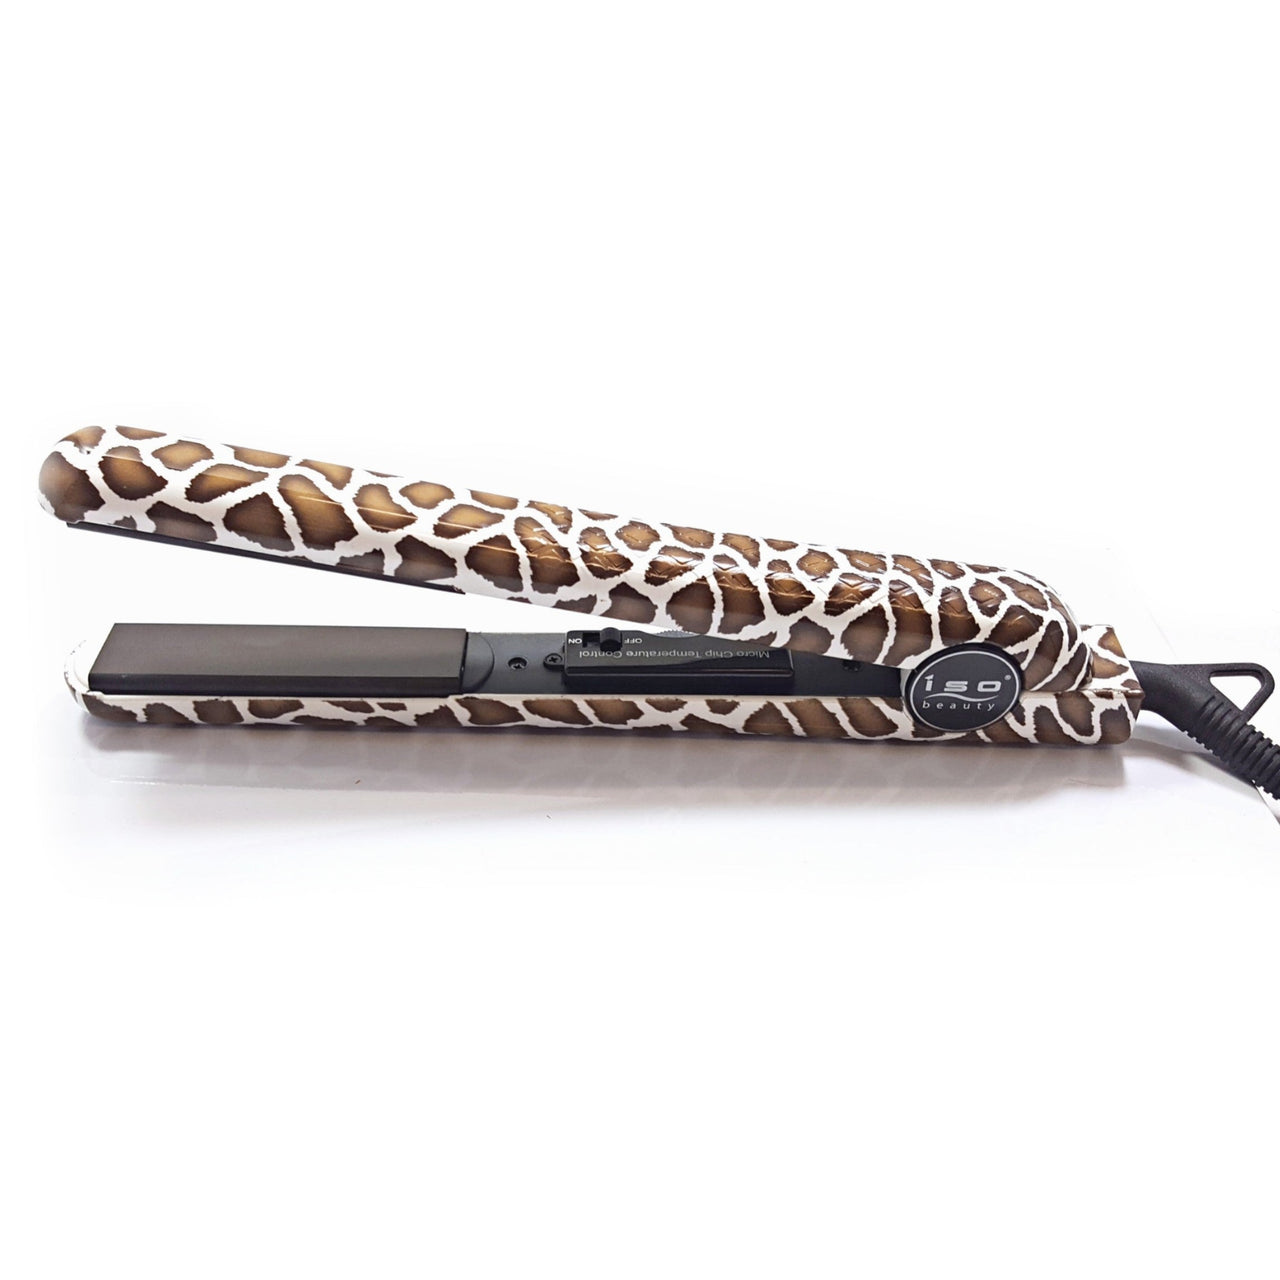 Limited Edition Original Giraffe 1.25" Ceramic Flat Iron Hair Straightener with Adjustable Temperature